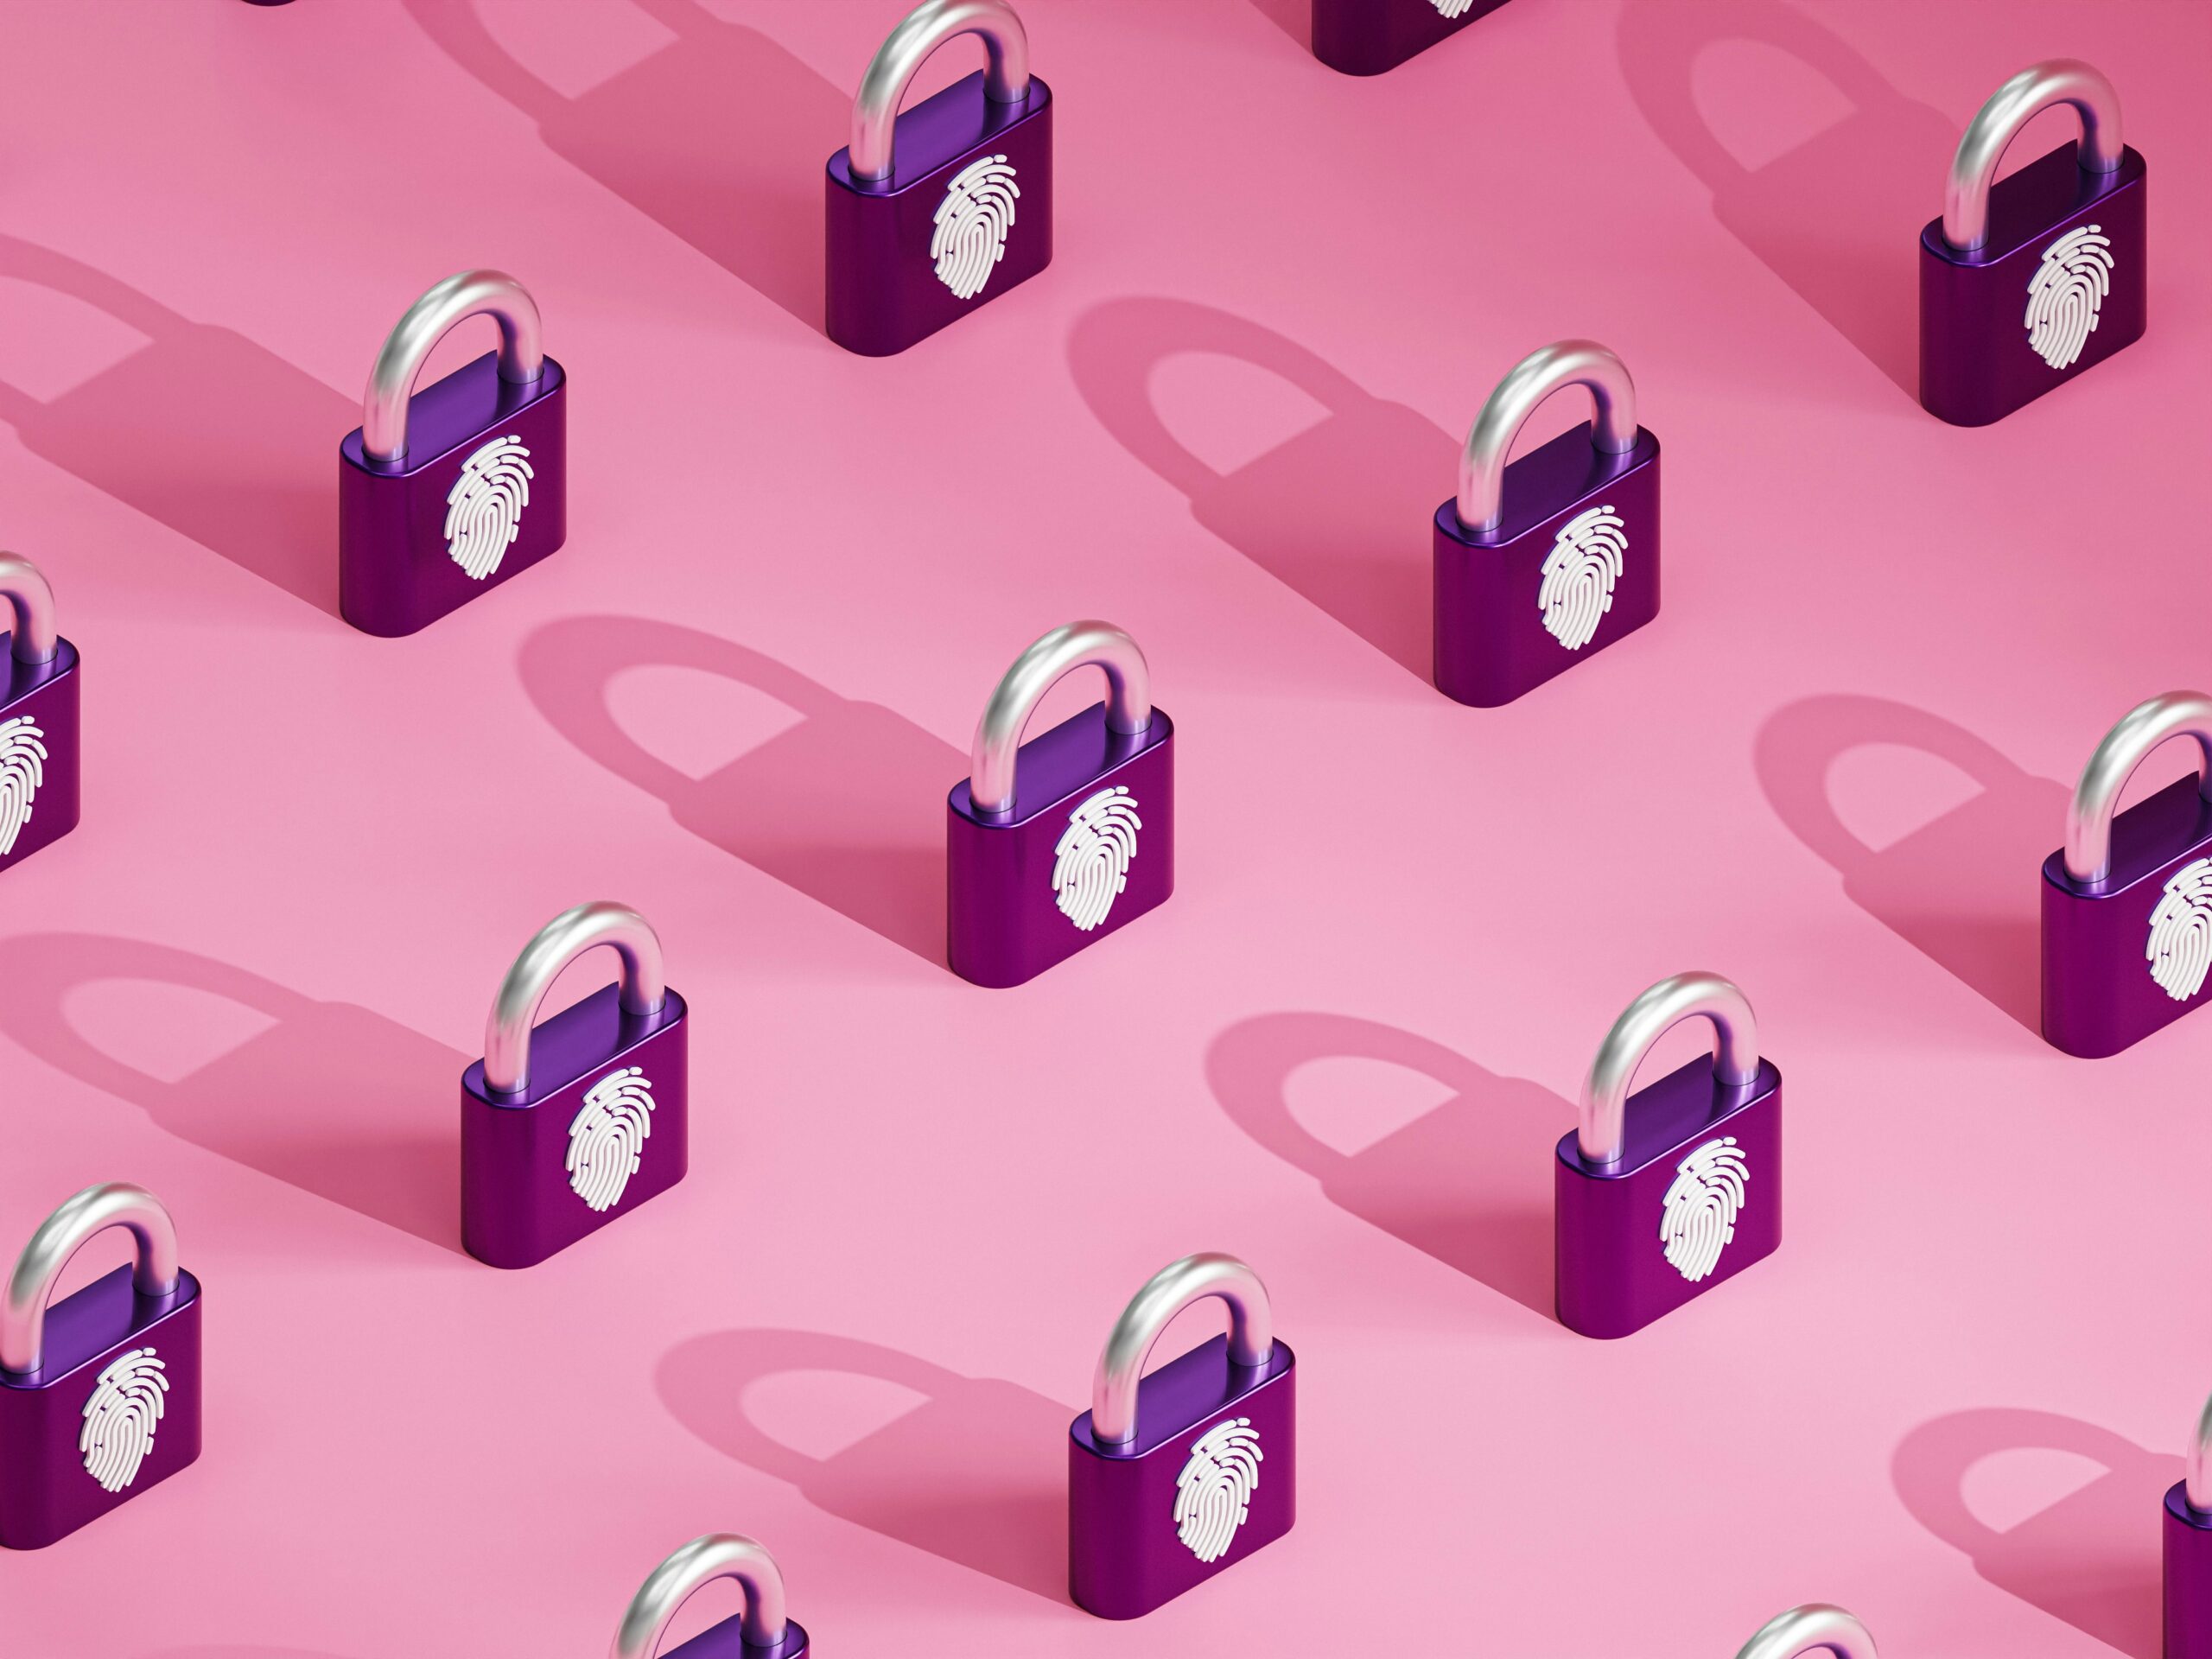 A group of purple padlocks symbolizing data security management.